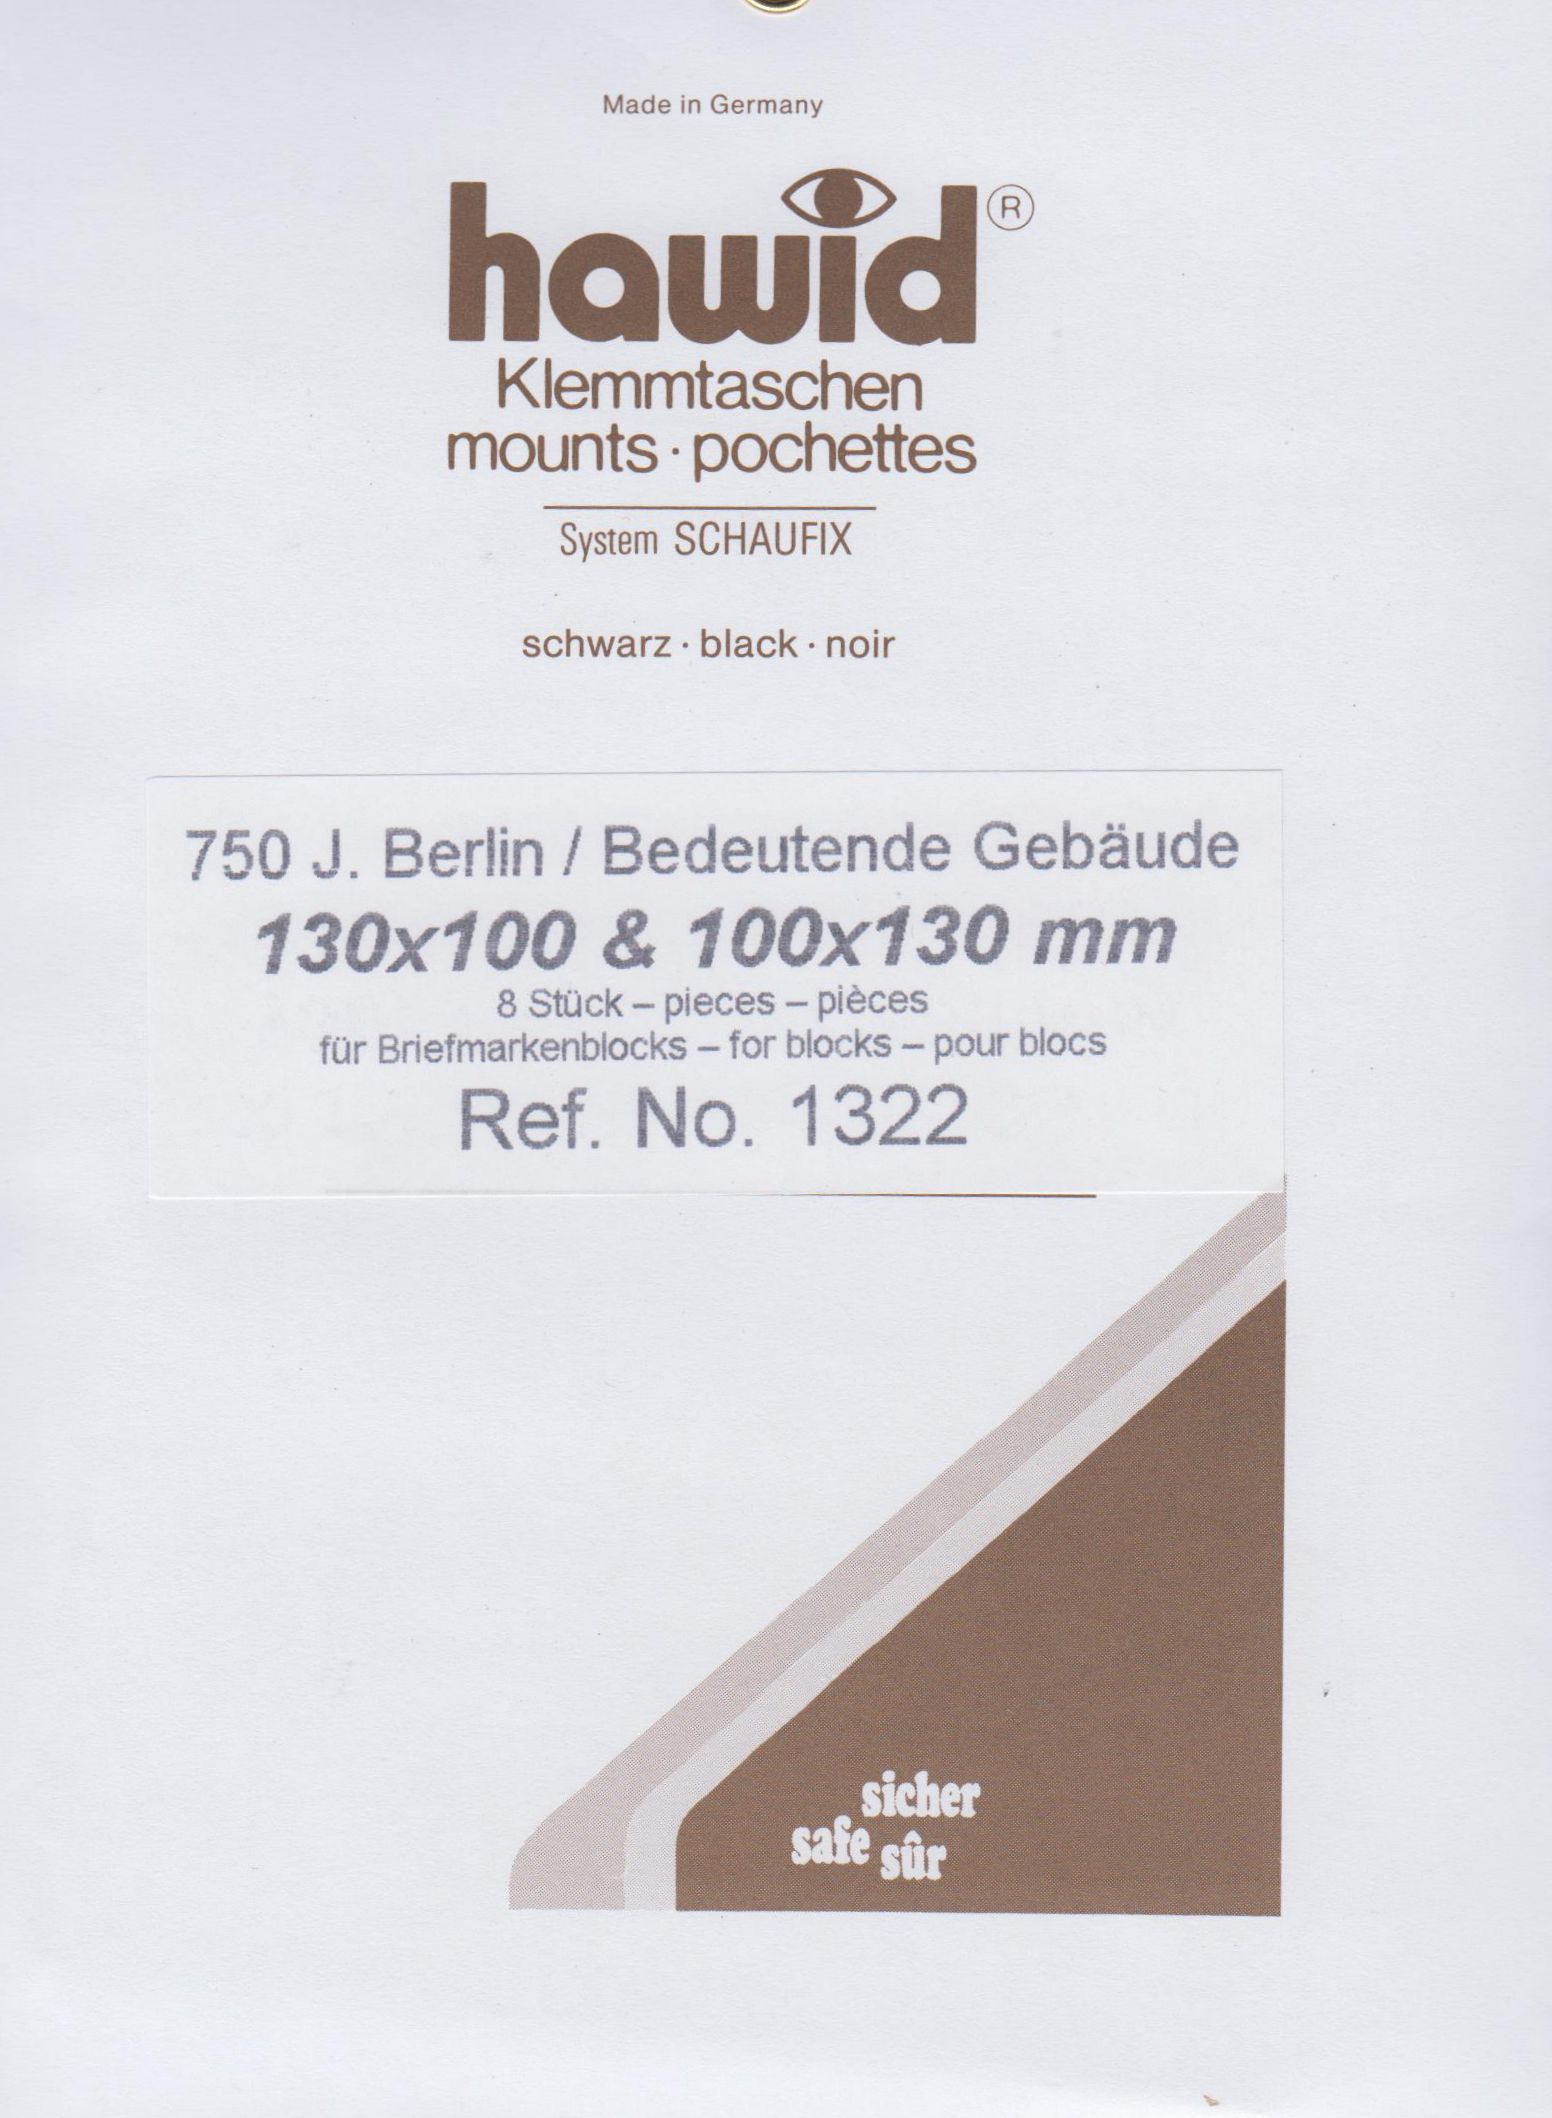 Hawid Klemmtasche 1322, 8 Stück schwarz, 130x100 & 100x130 mm, System Schaufix